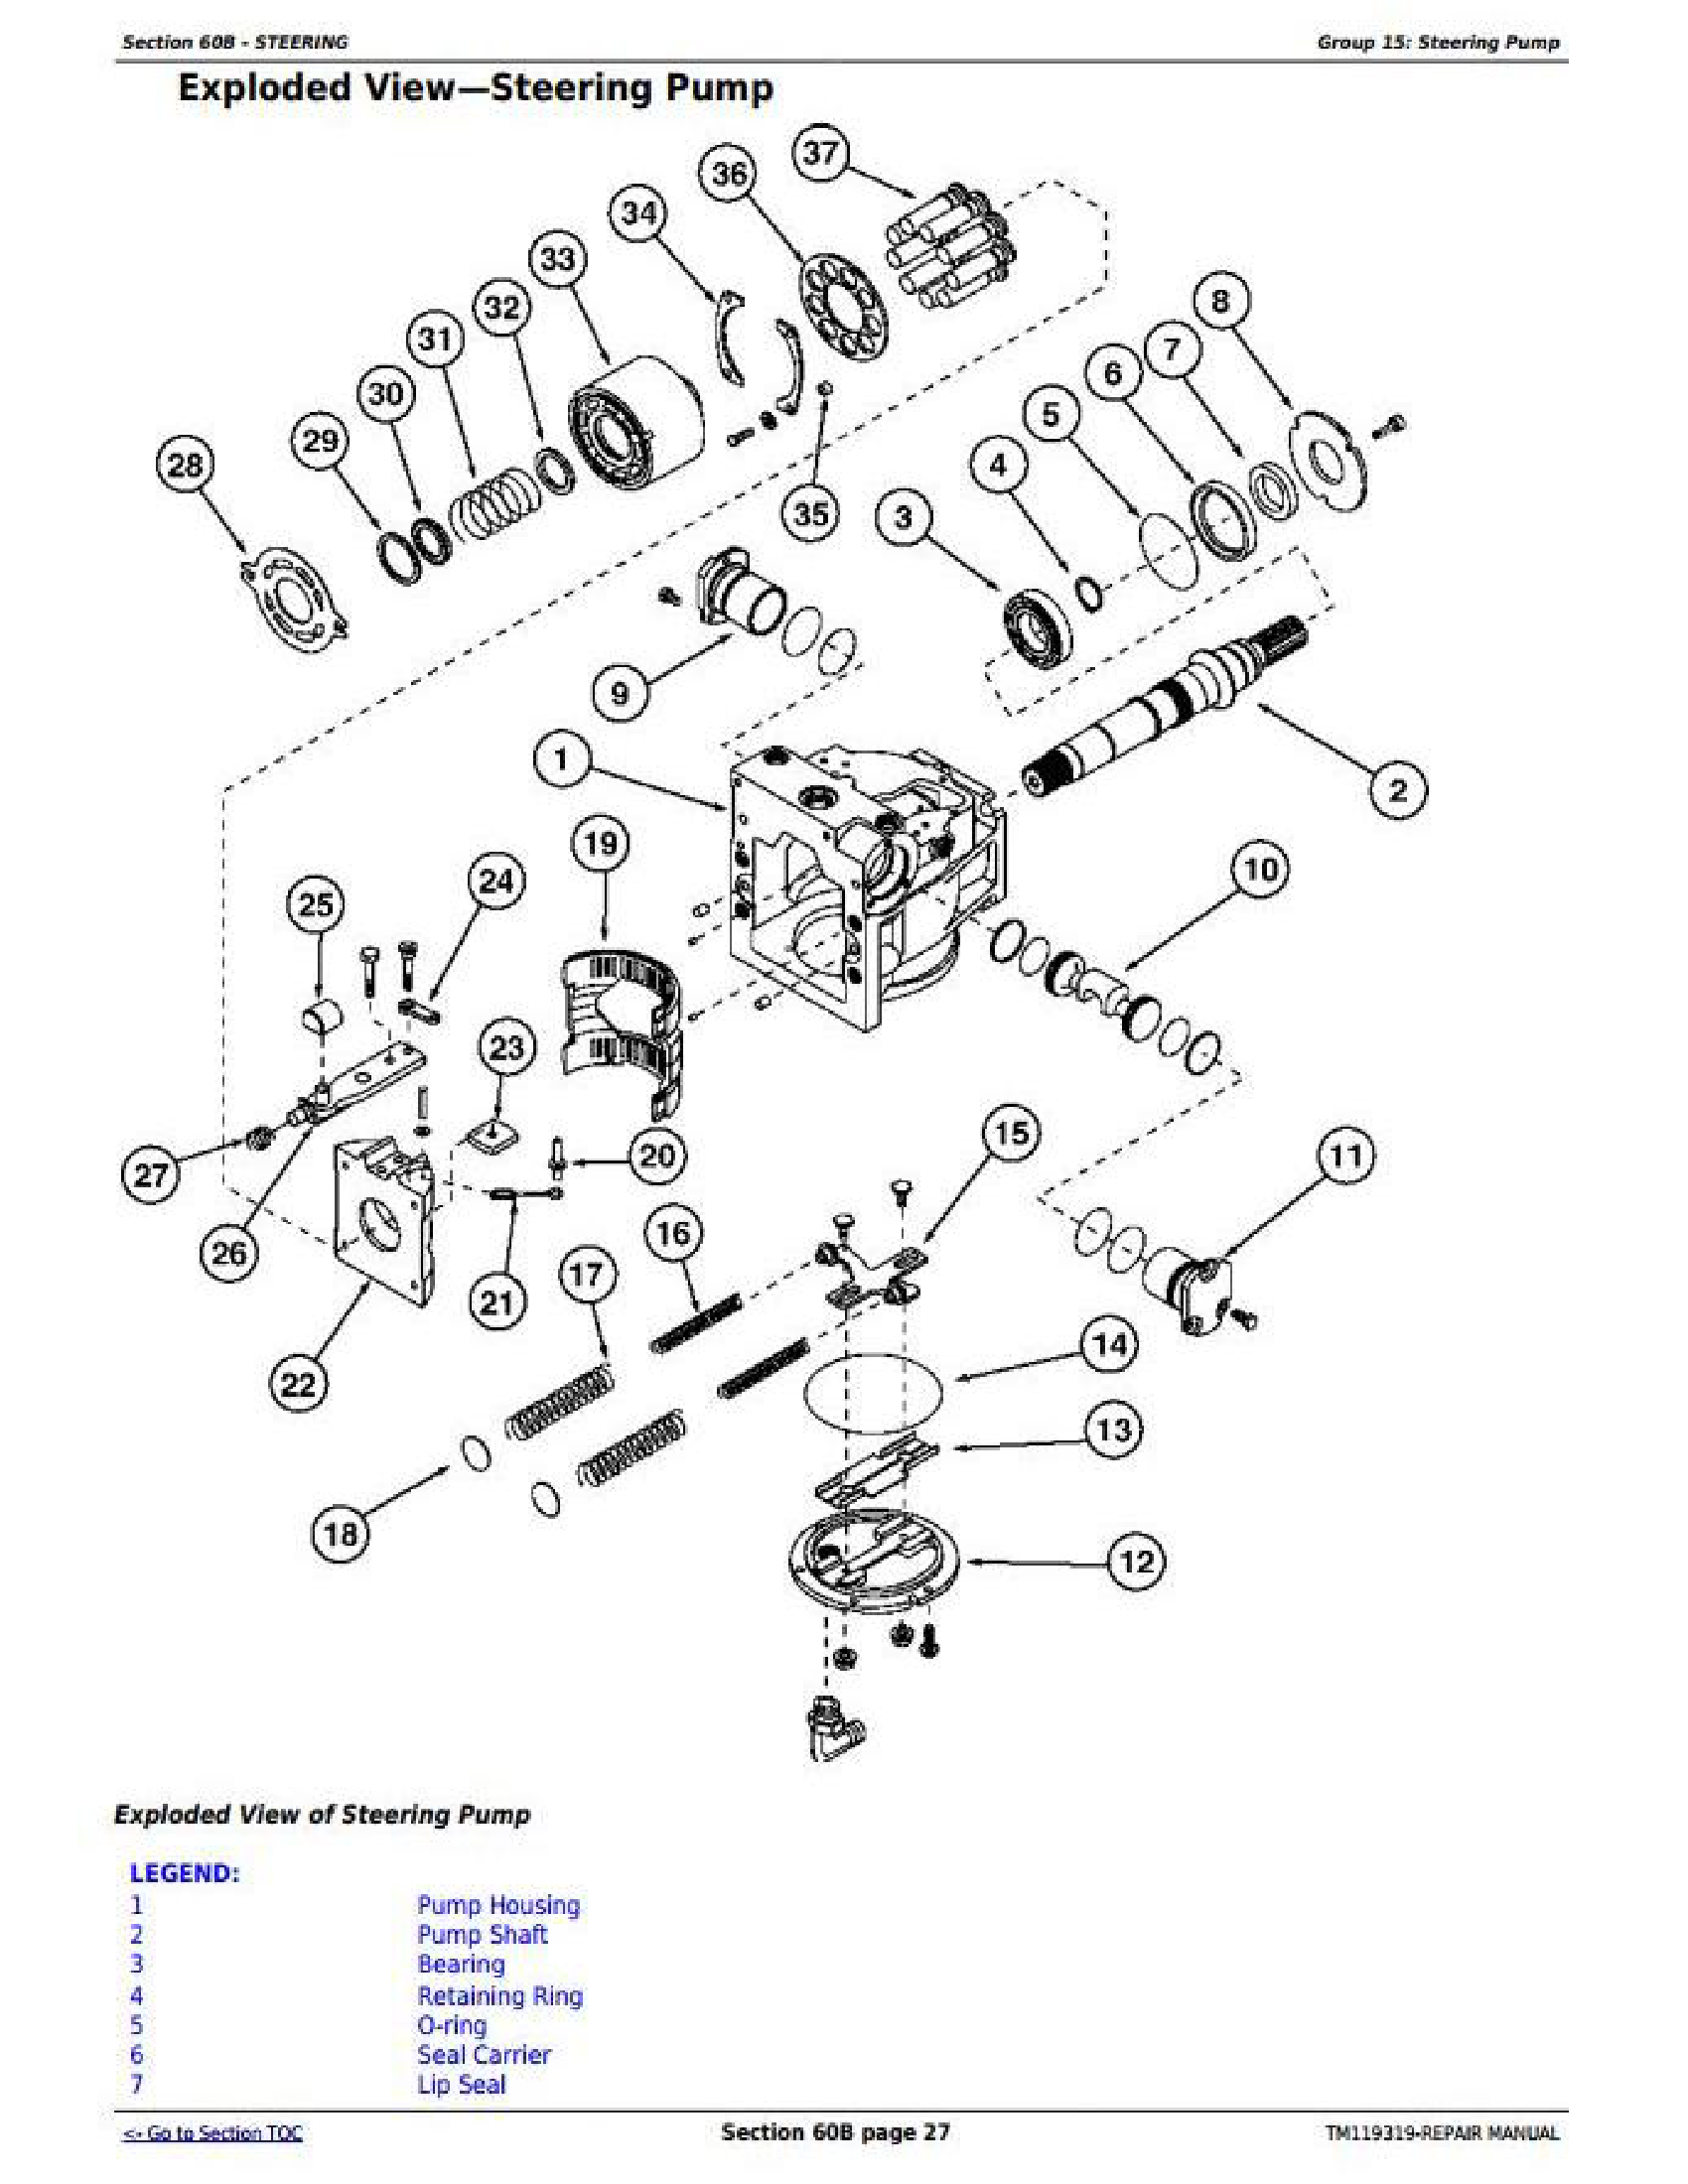 John Deere 8370RT manual pdf